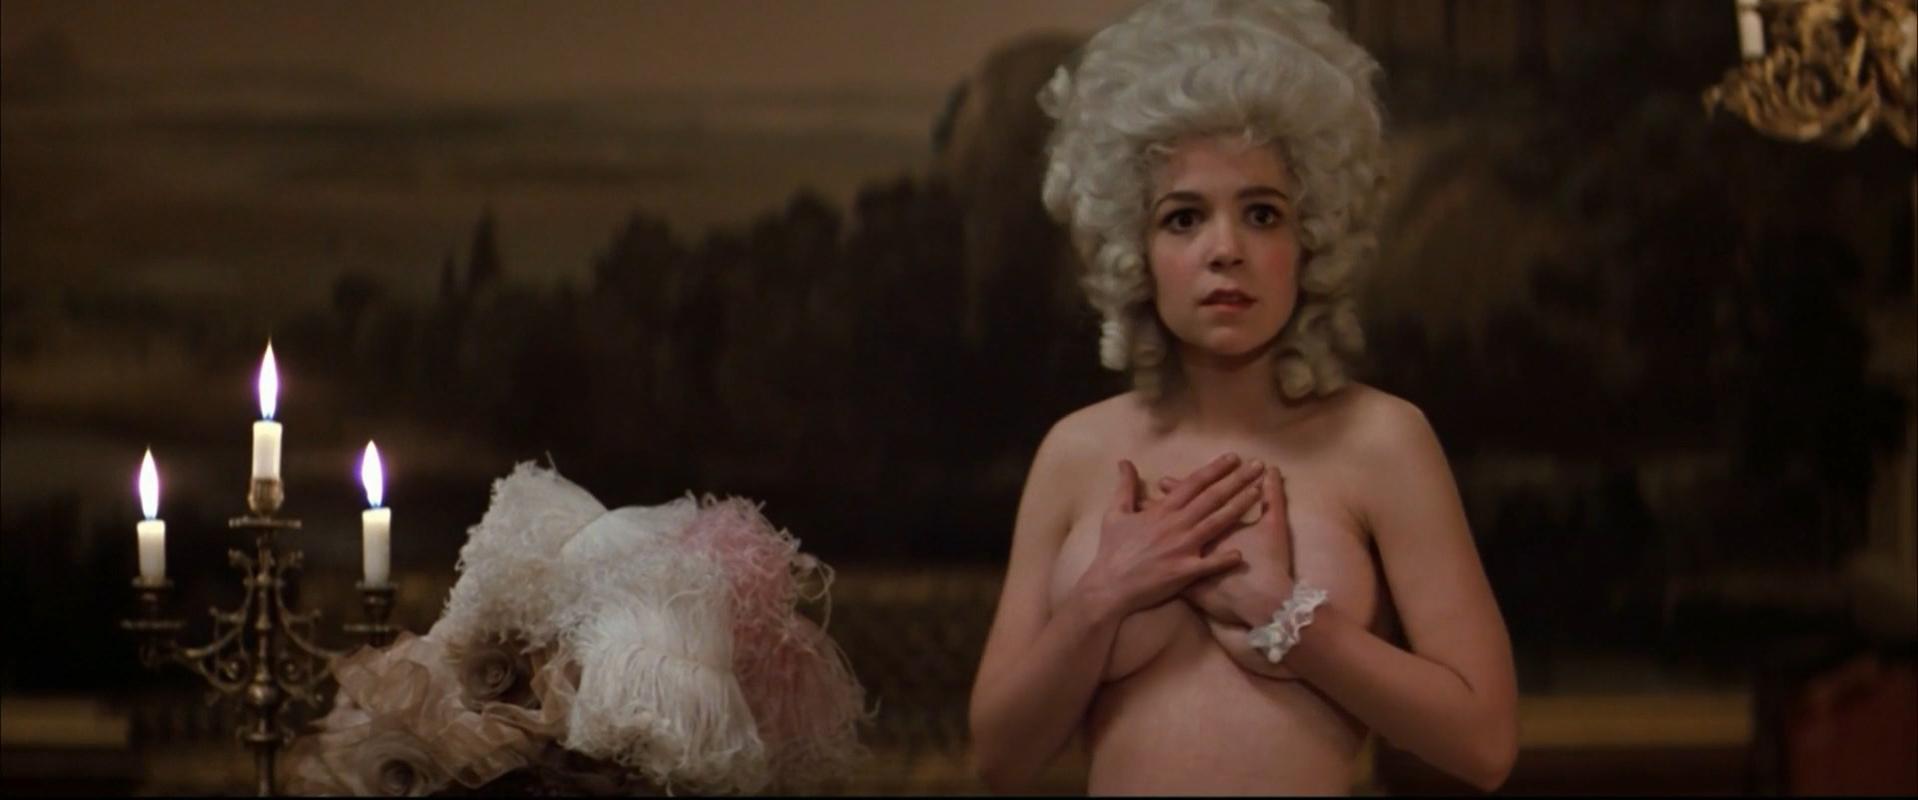 Amadeus movie nude scene